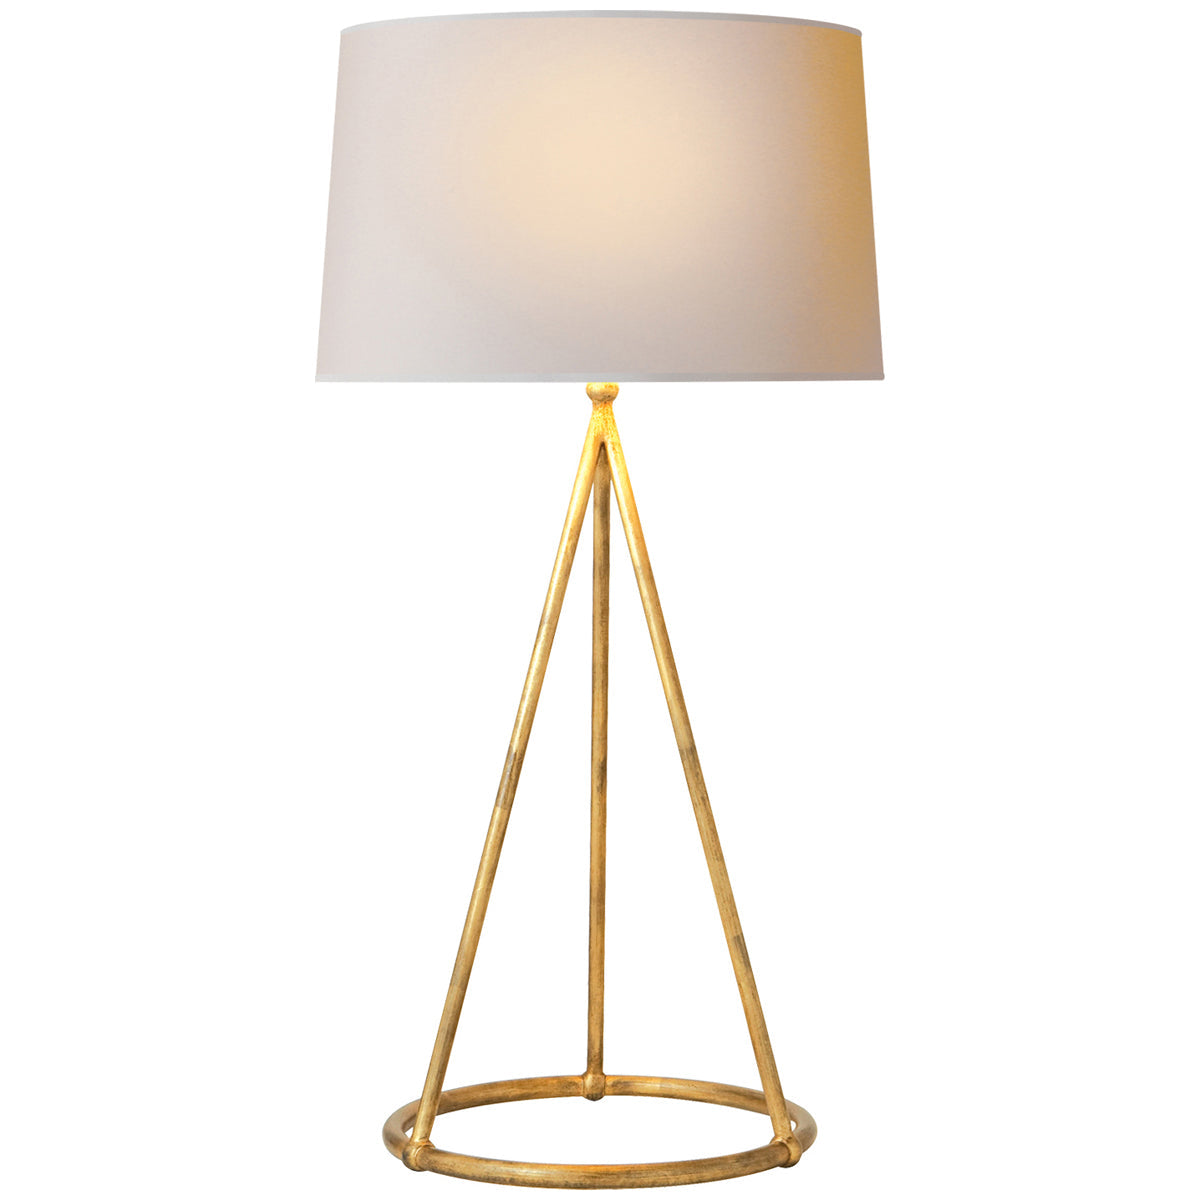 Visual Comfort Nina Tapered Table Lamp